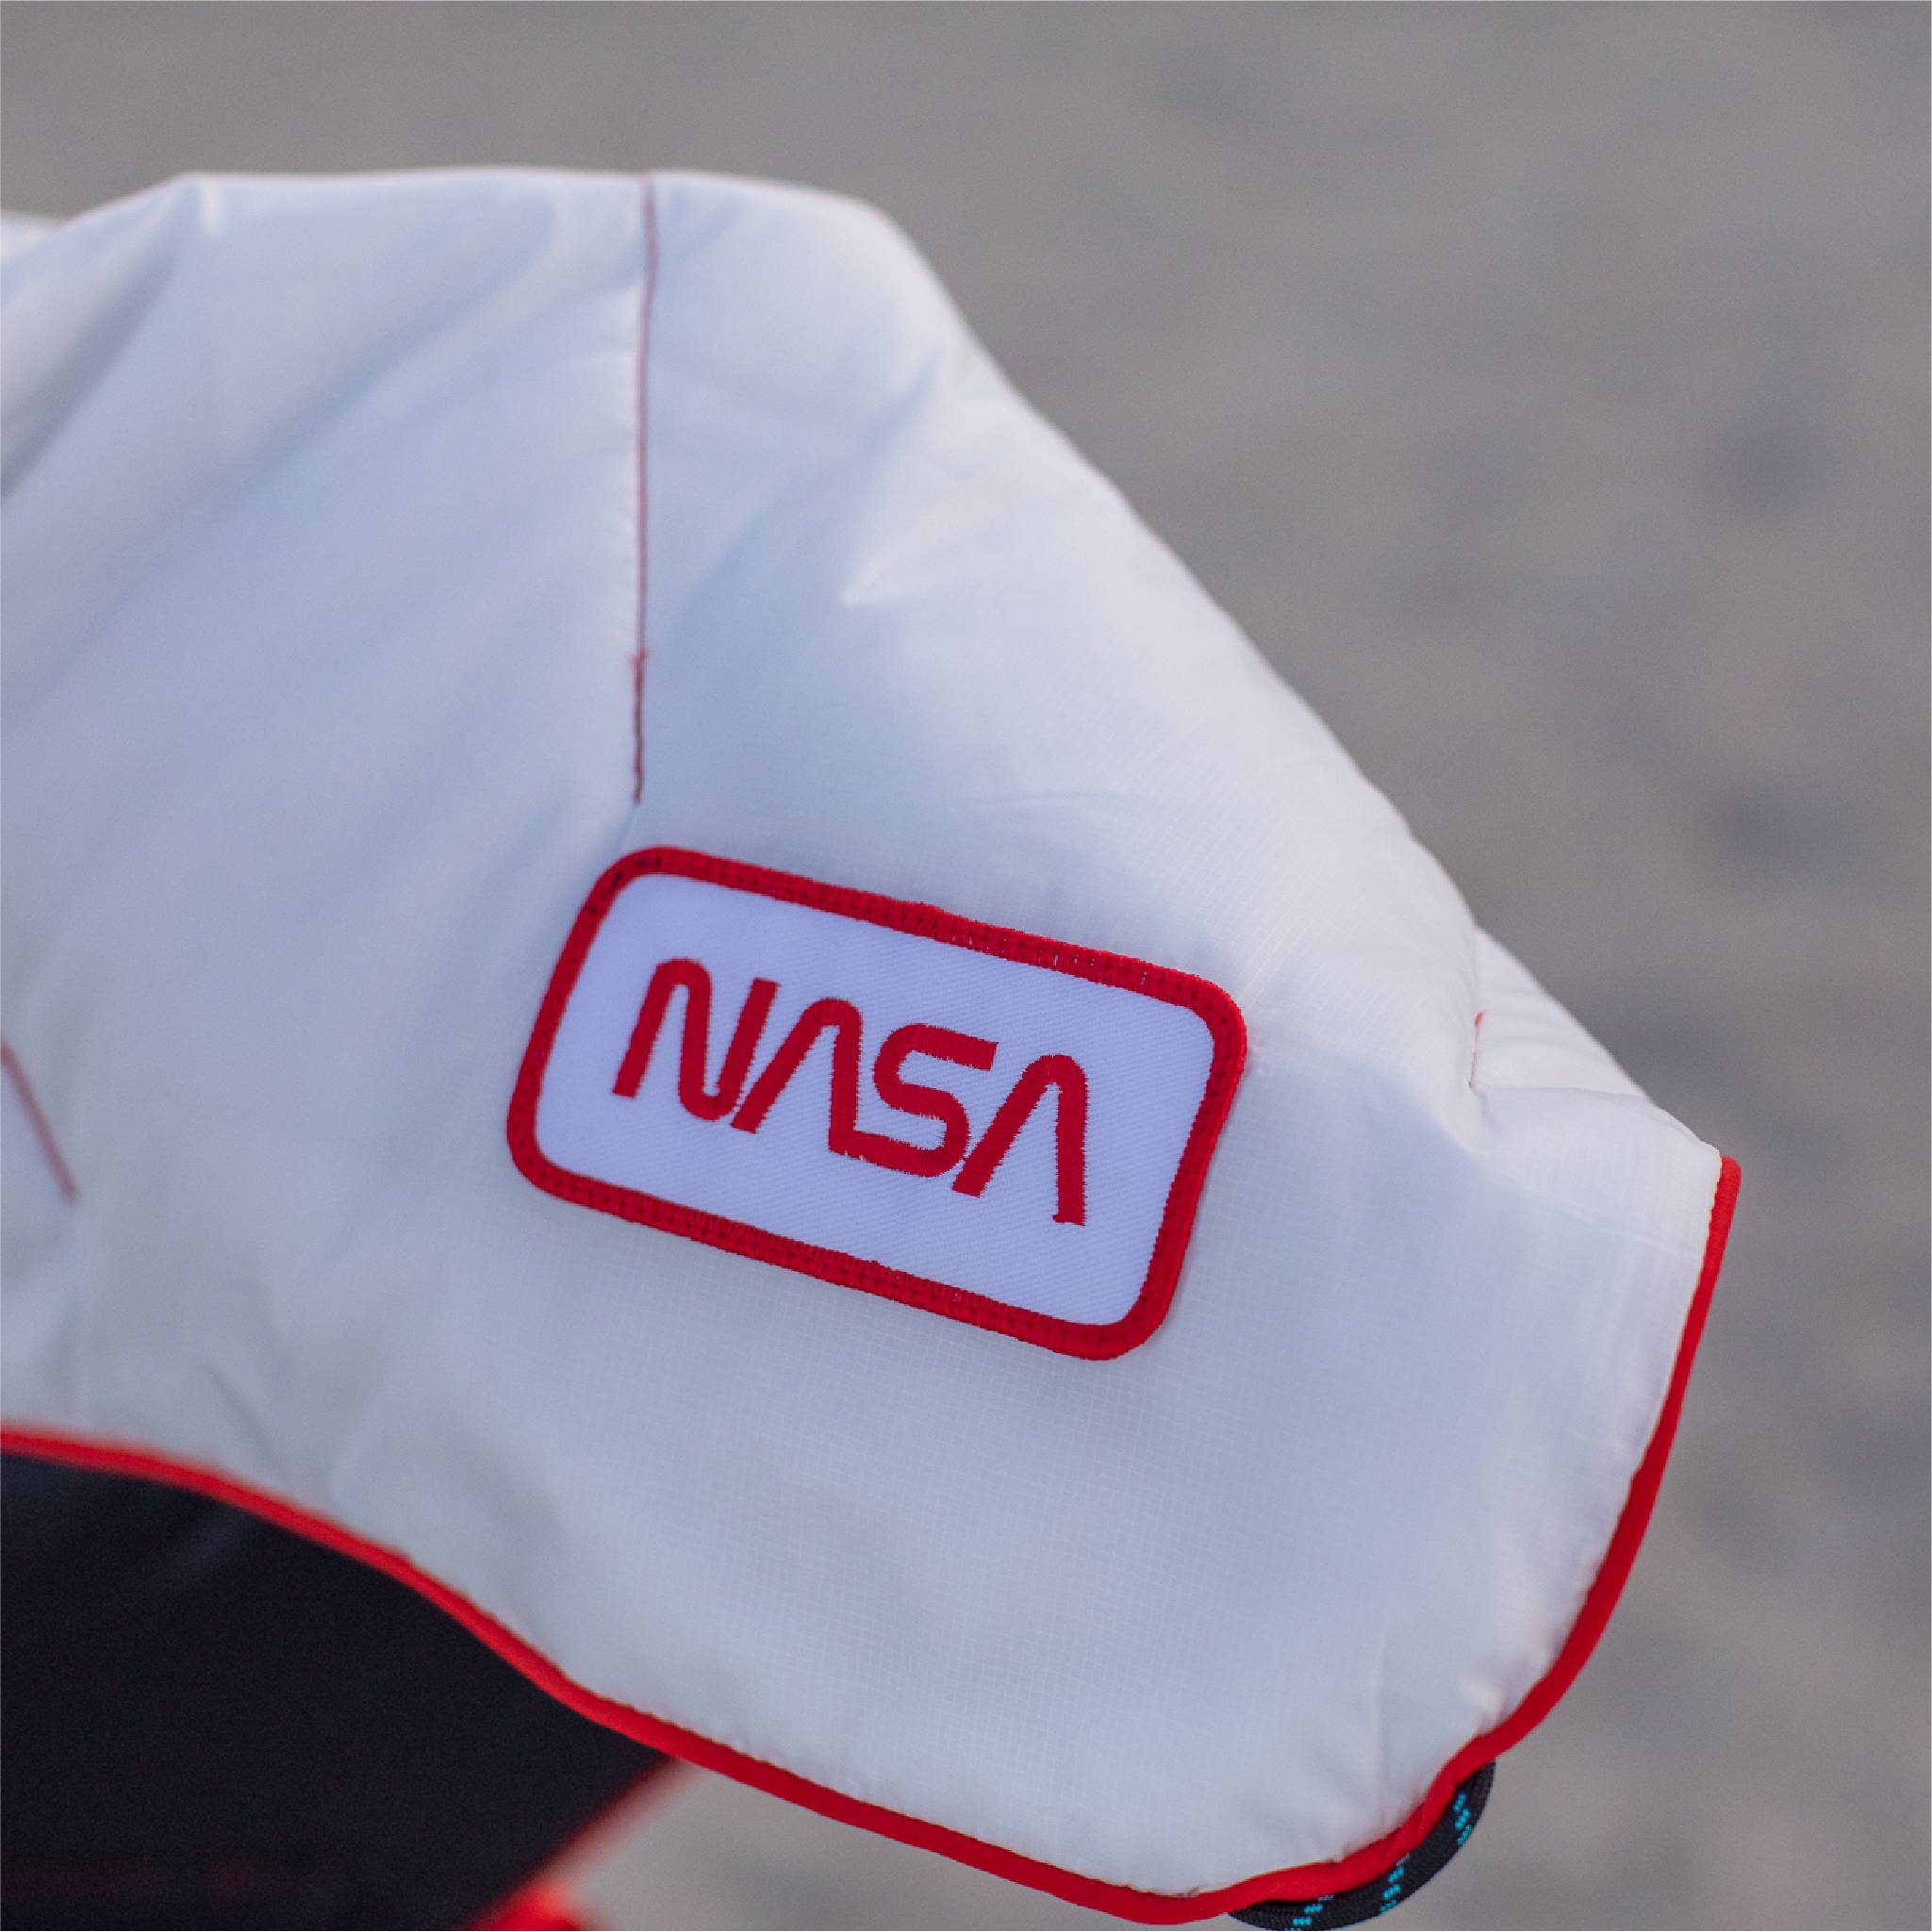 White NASA worm logo patch on a Rumpl blanket